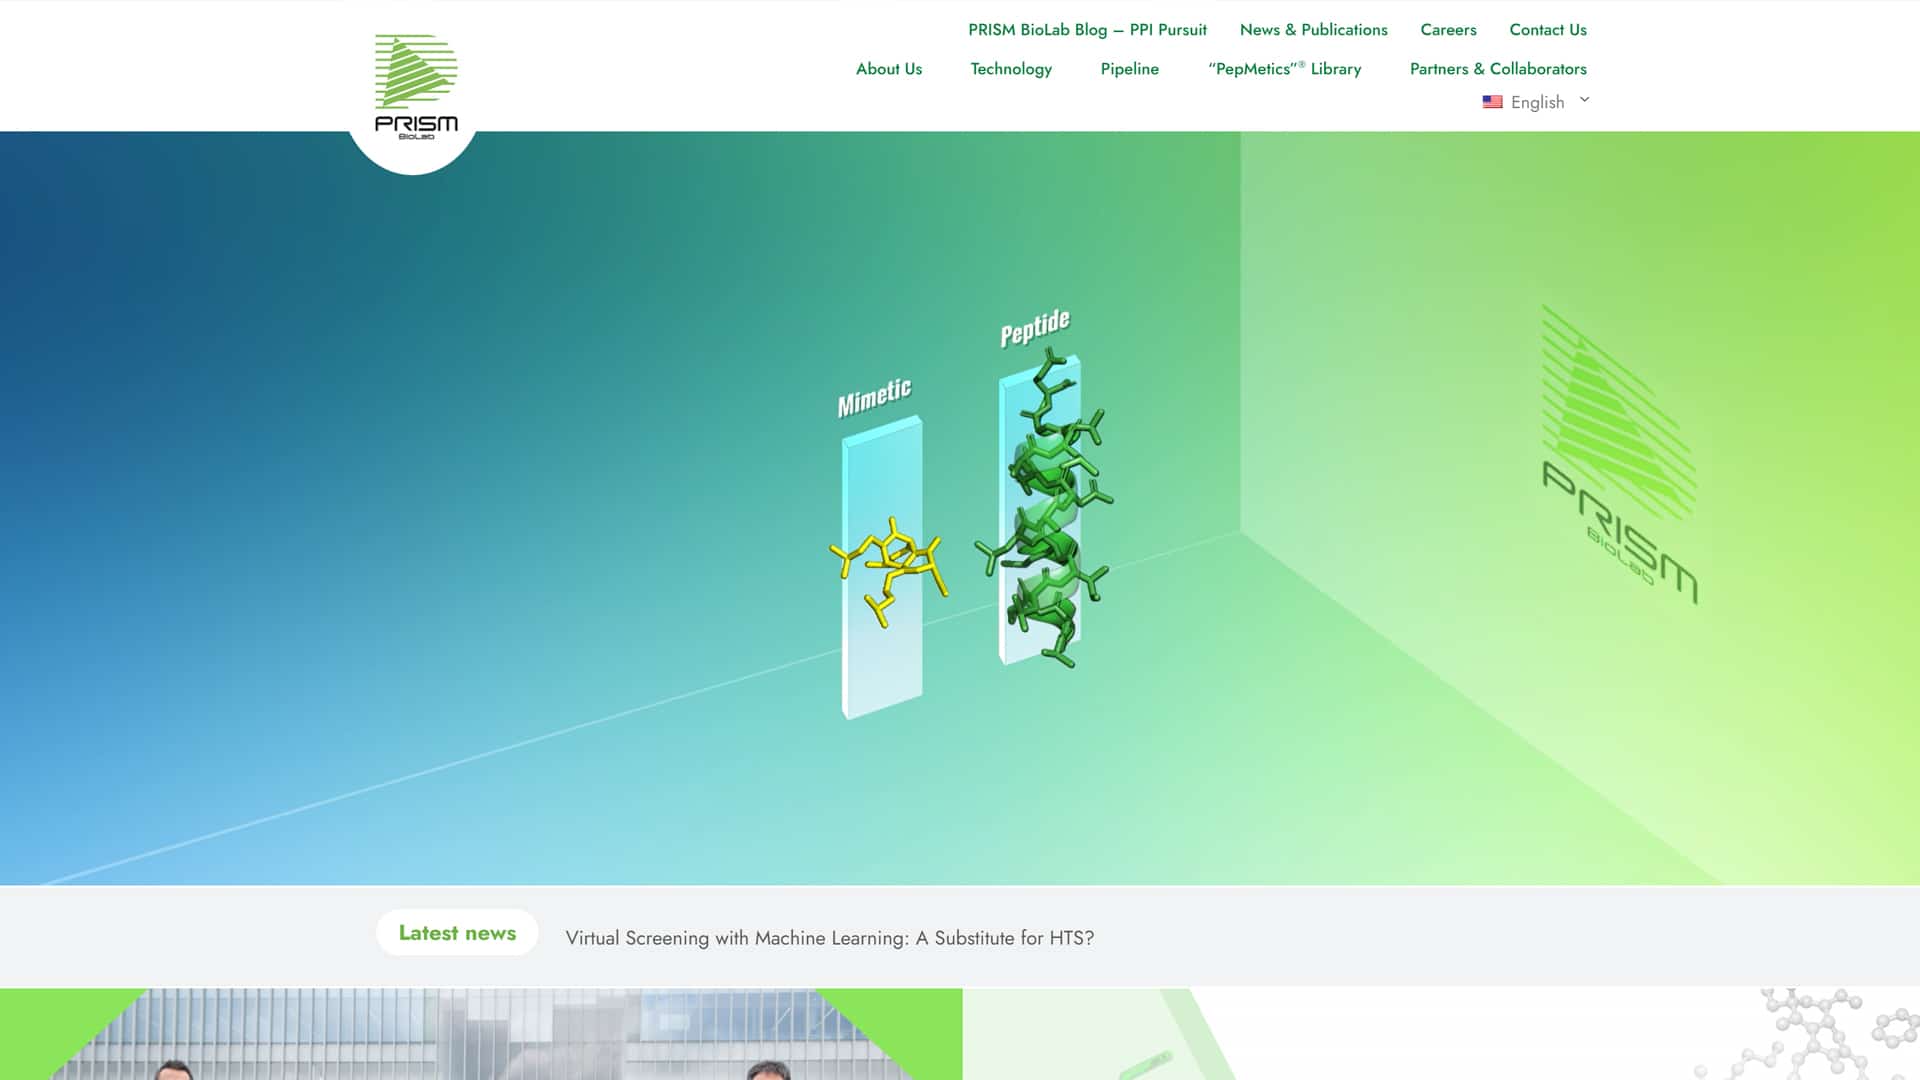 Prism Biolab biotech website portfolio web project featured image